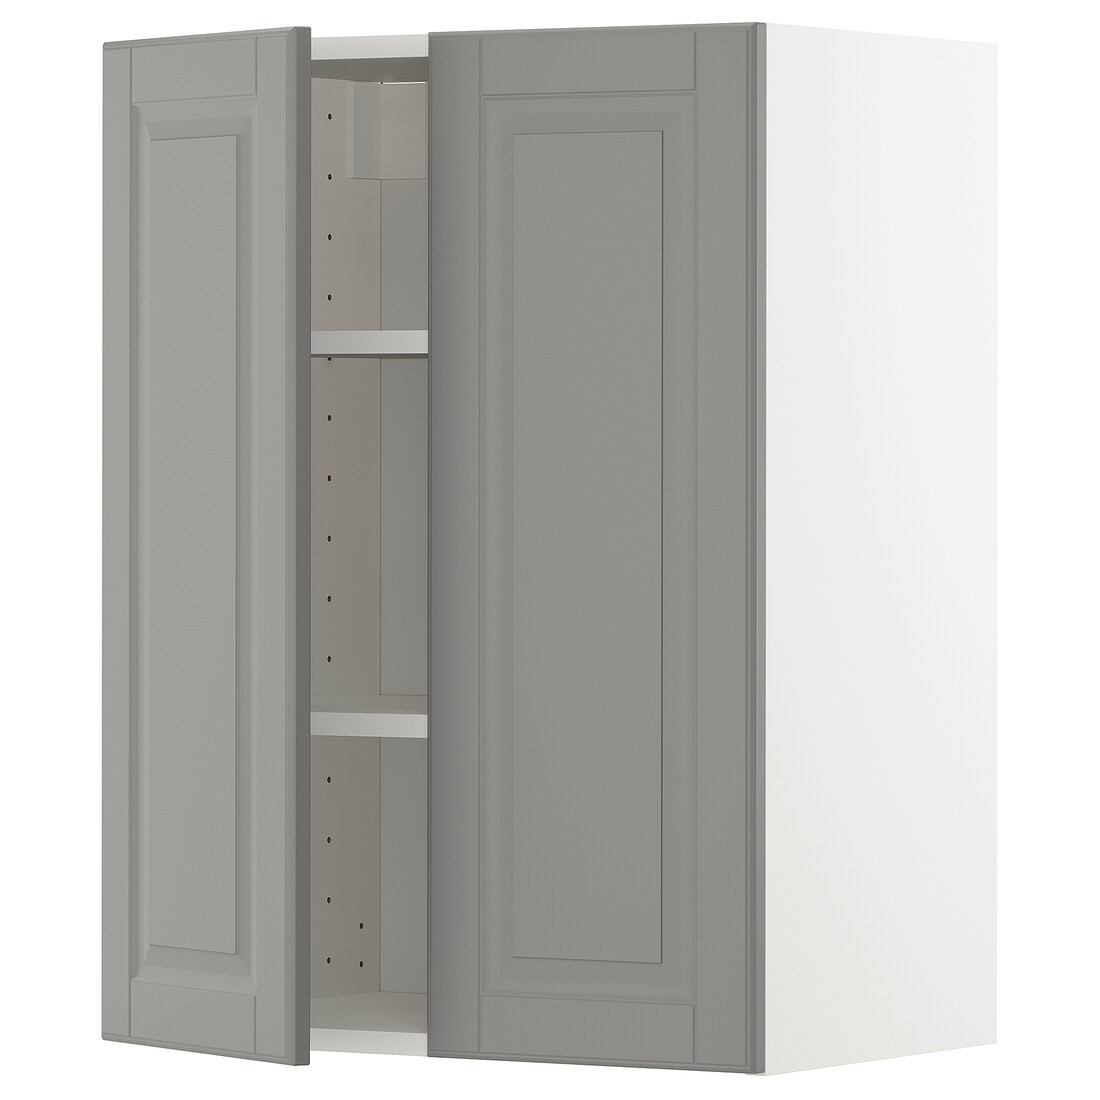 METOD МЕТОД Навесной шкаф с полками / 2 дверцы, белый / Bodbyn серый, 60x80 см